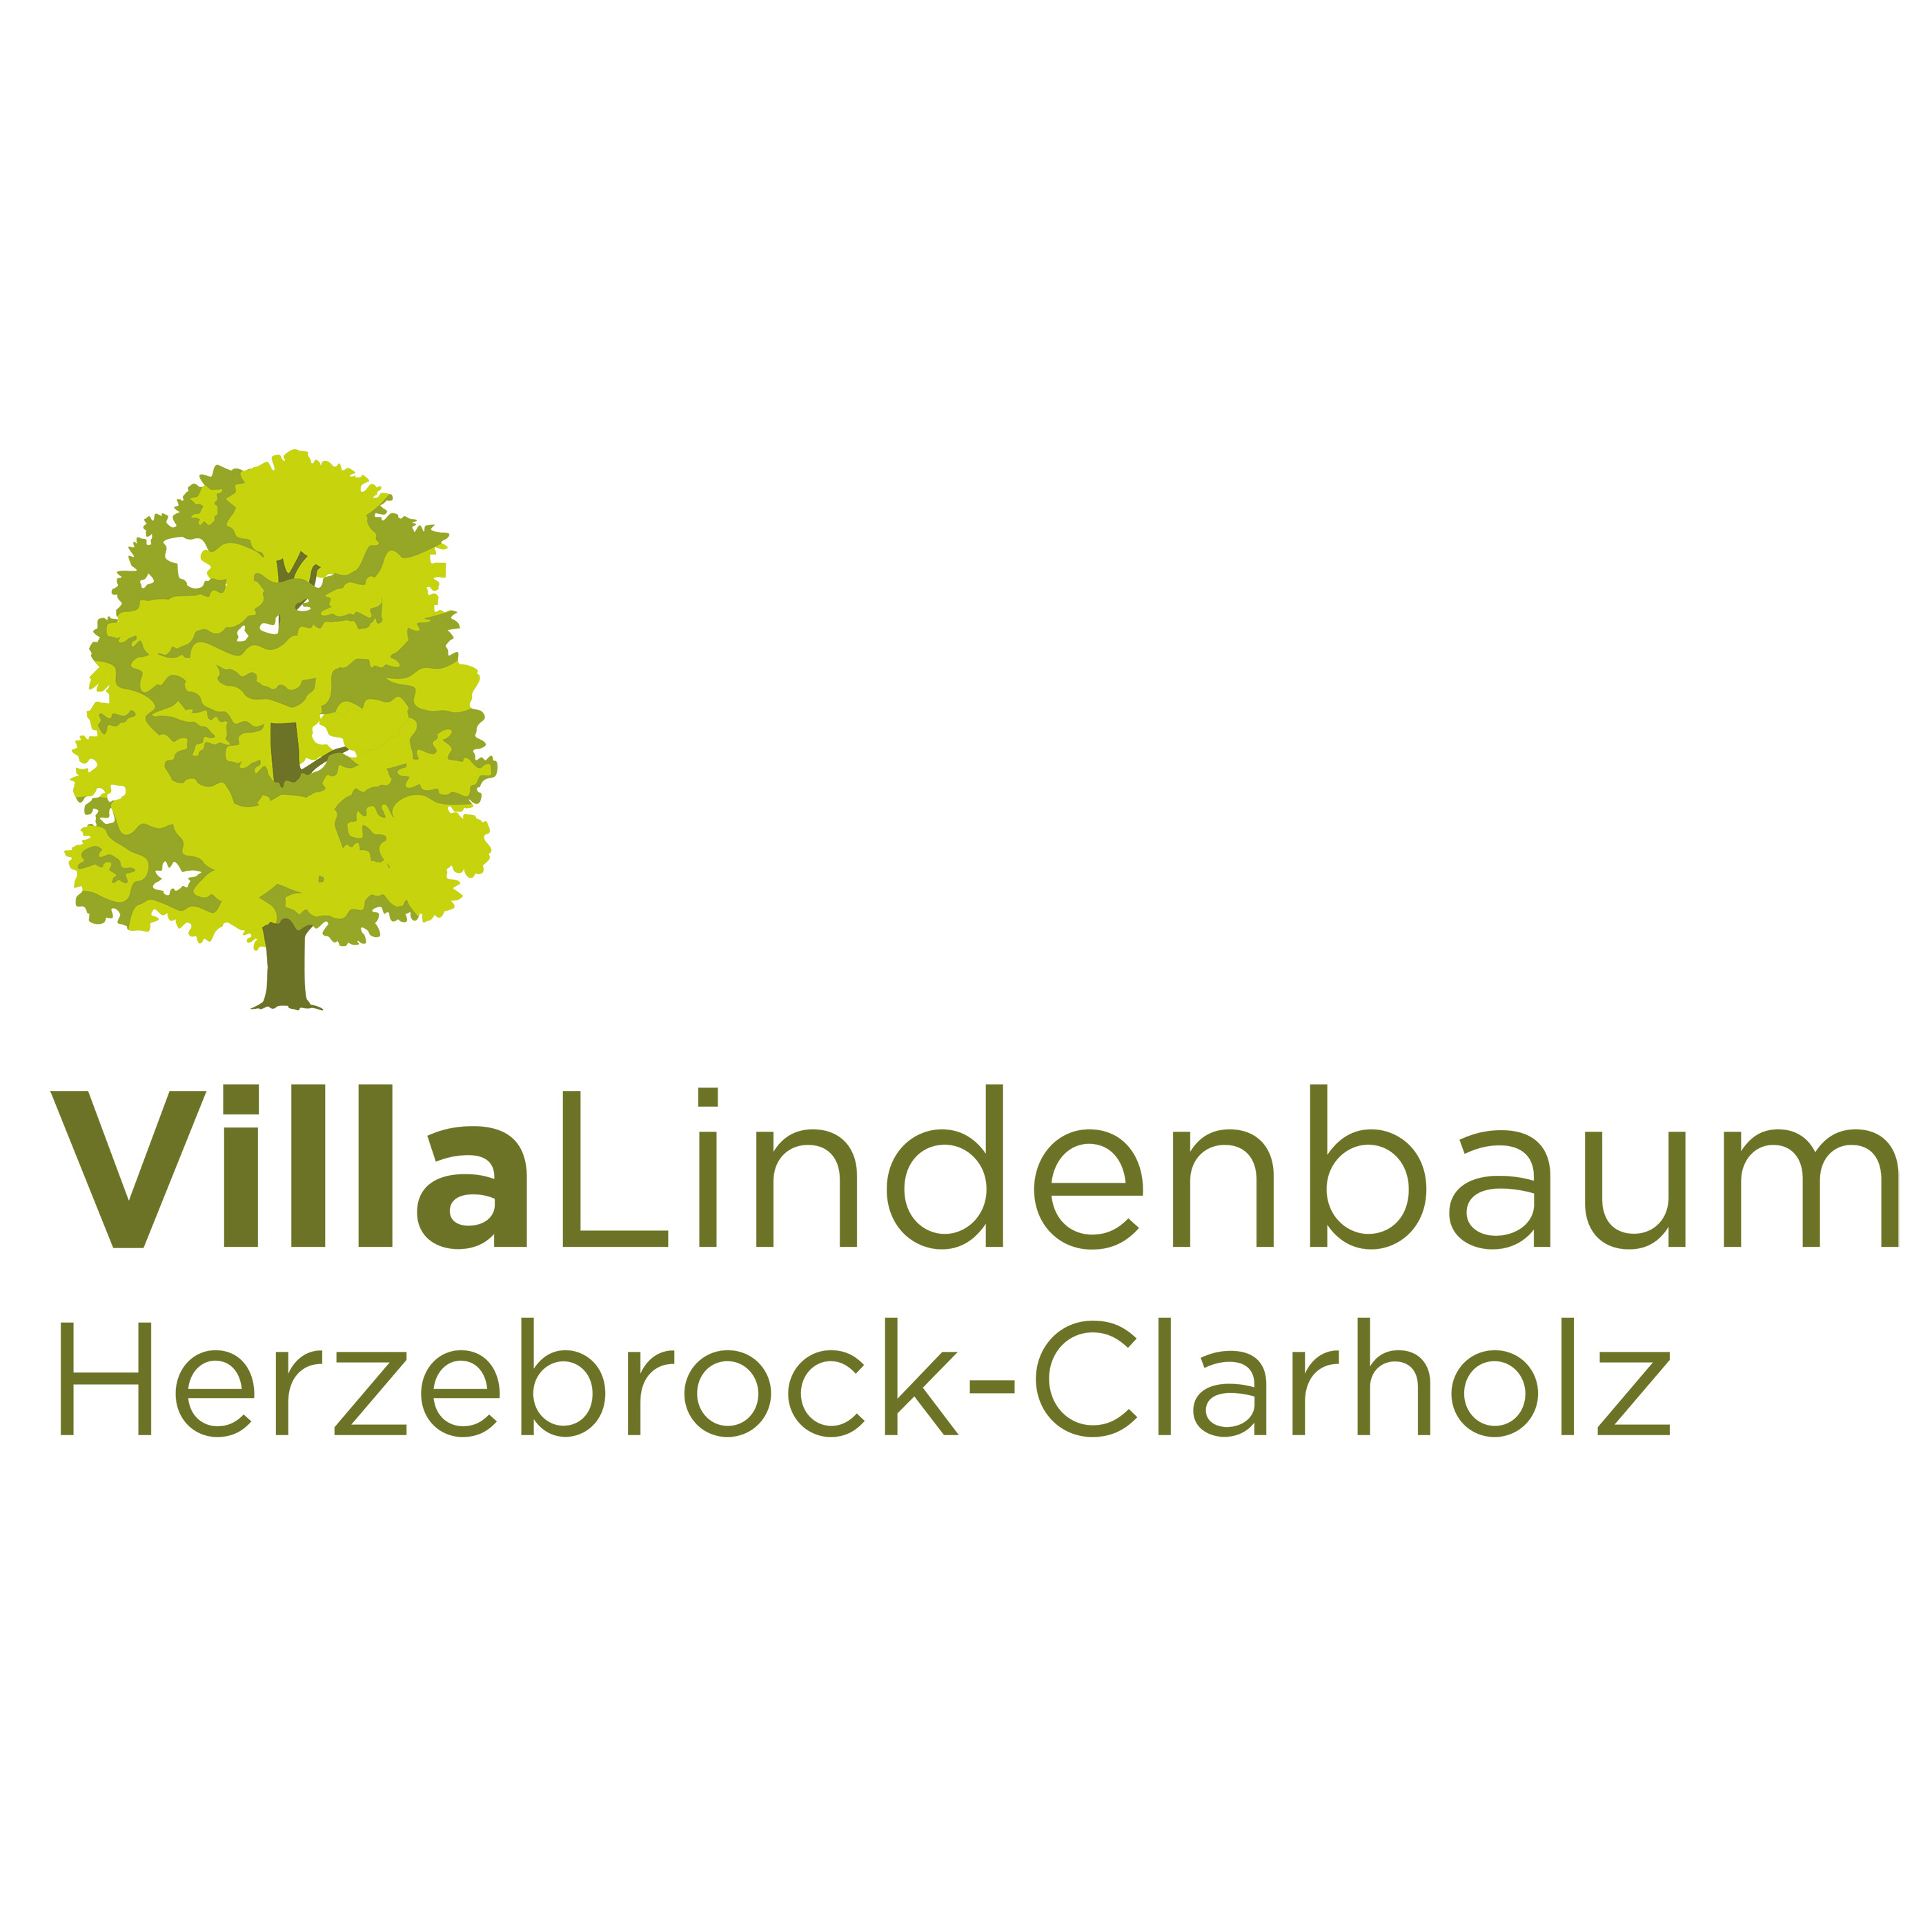 Villa Lindenbaum - pme Familienservice in Herzebrock Clarholz - Logo